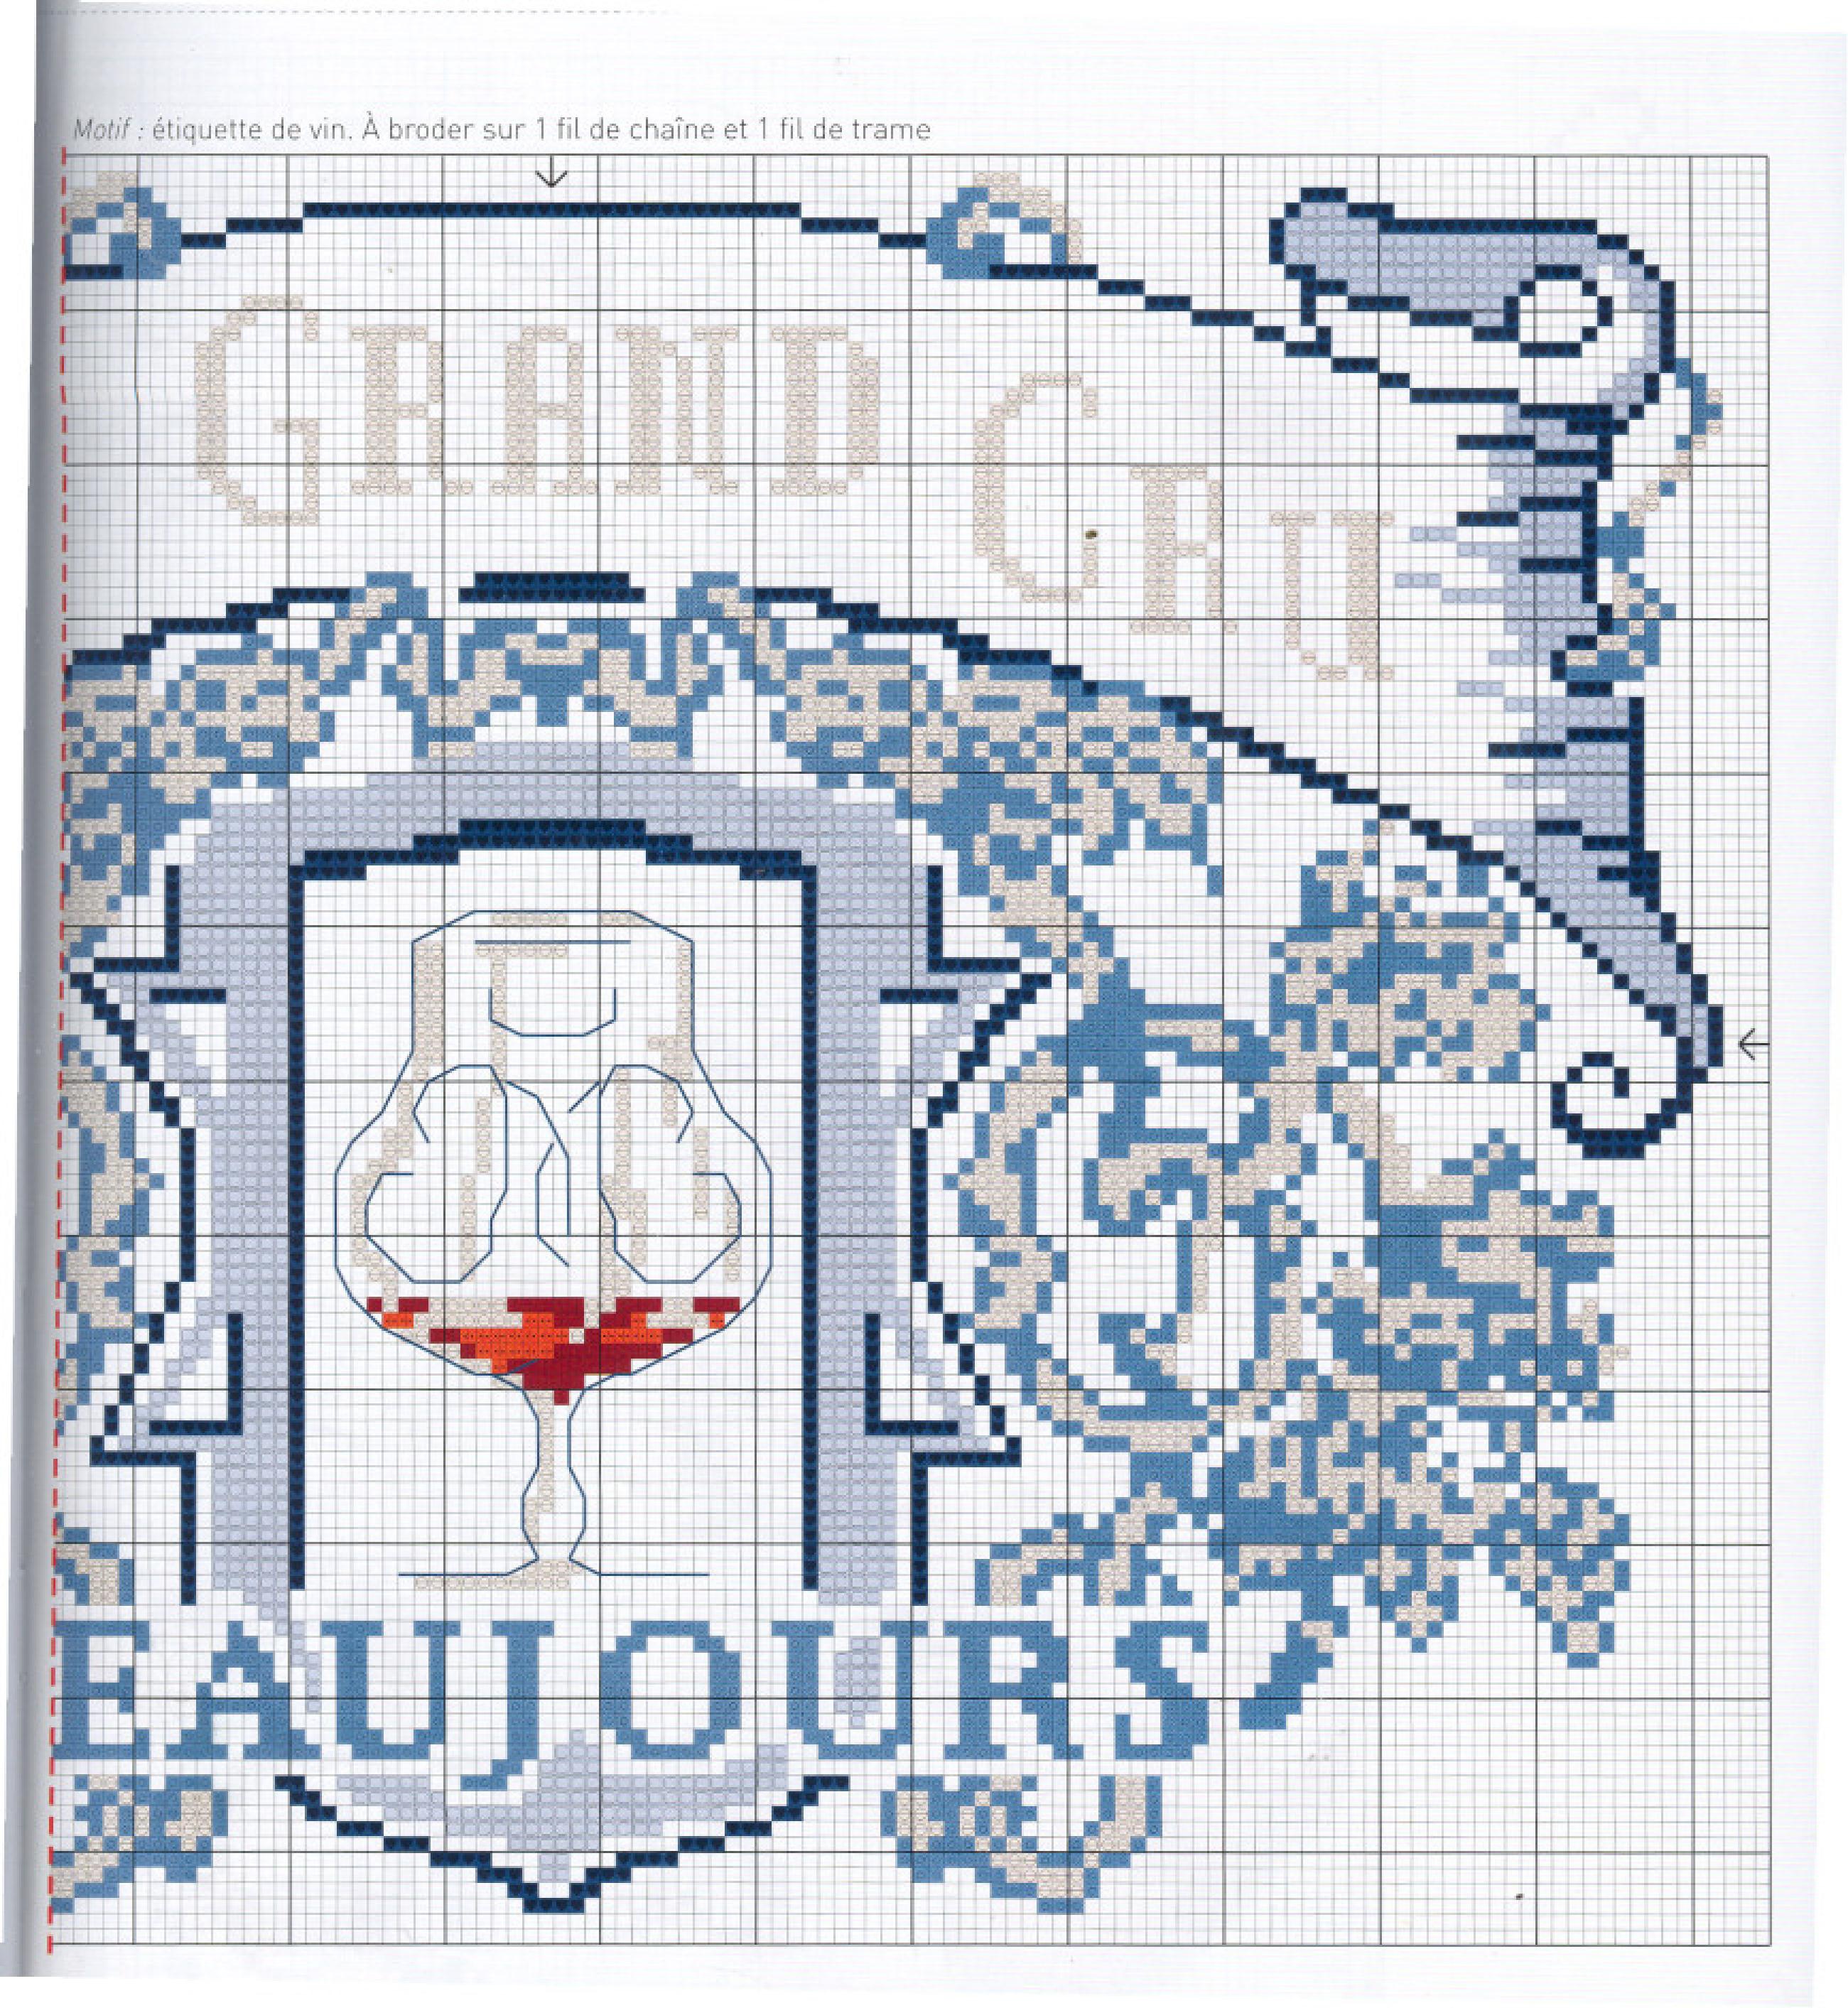 Coat of arm of French vineyard cross stitch pattern (2)